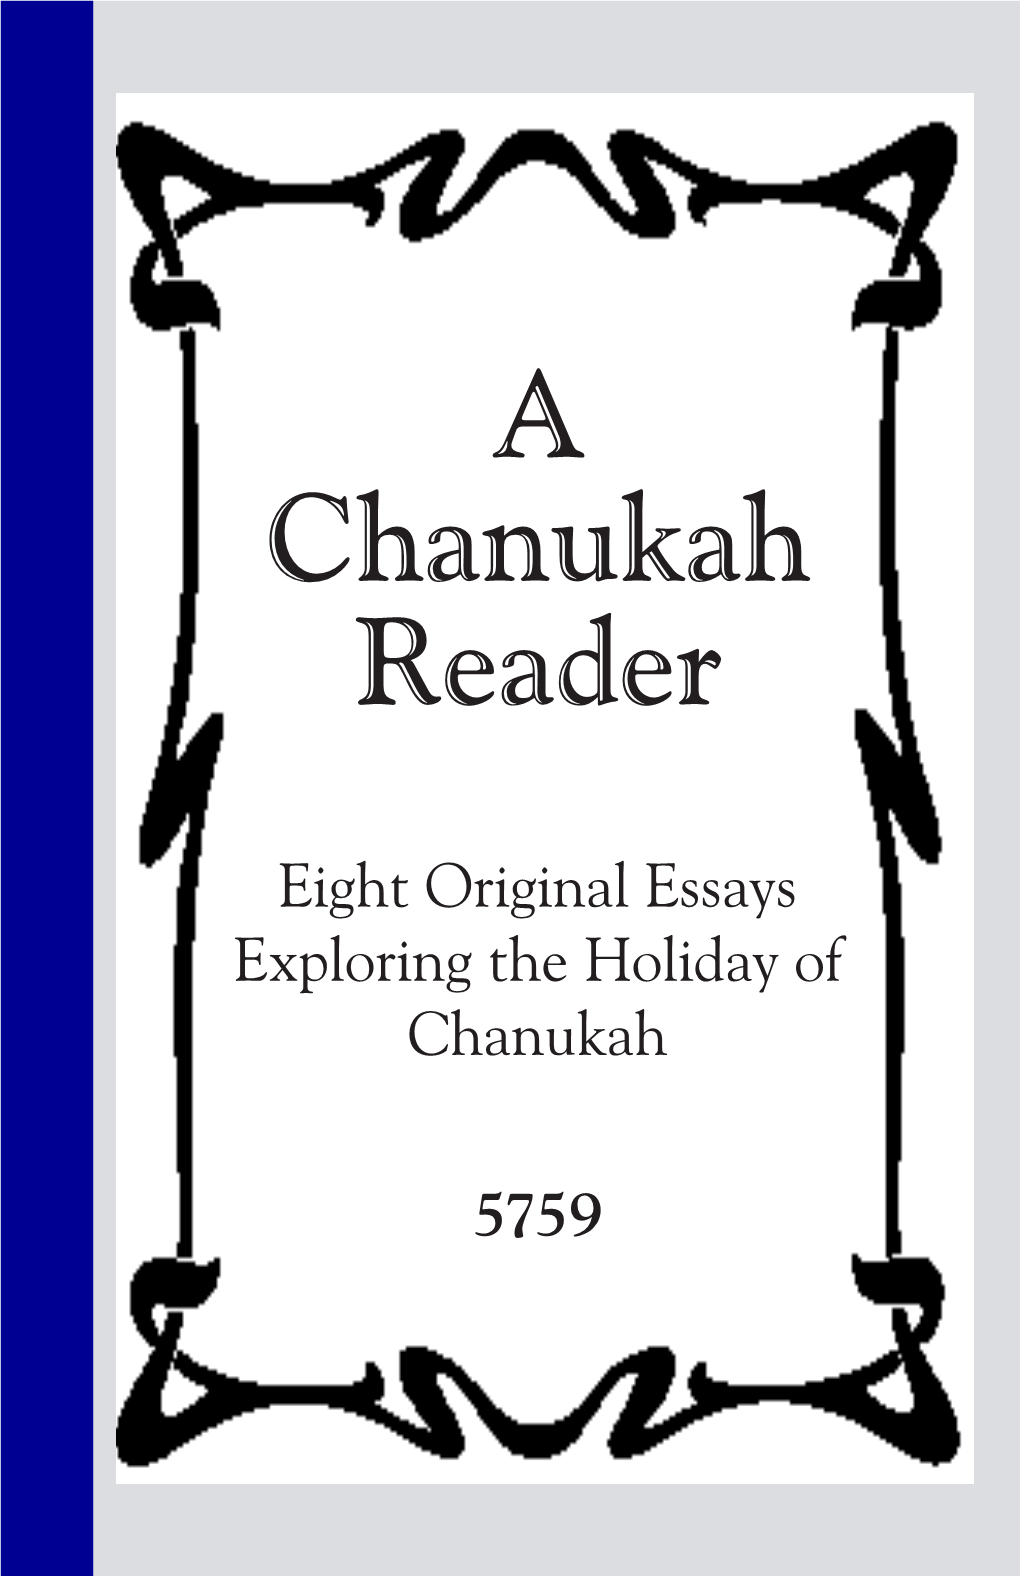 A Chanukah Reader